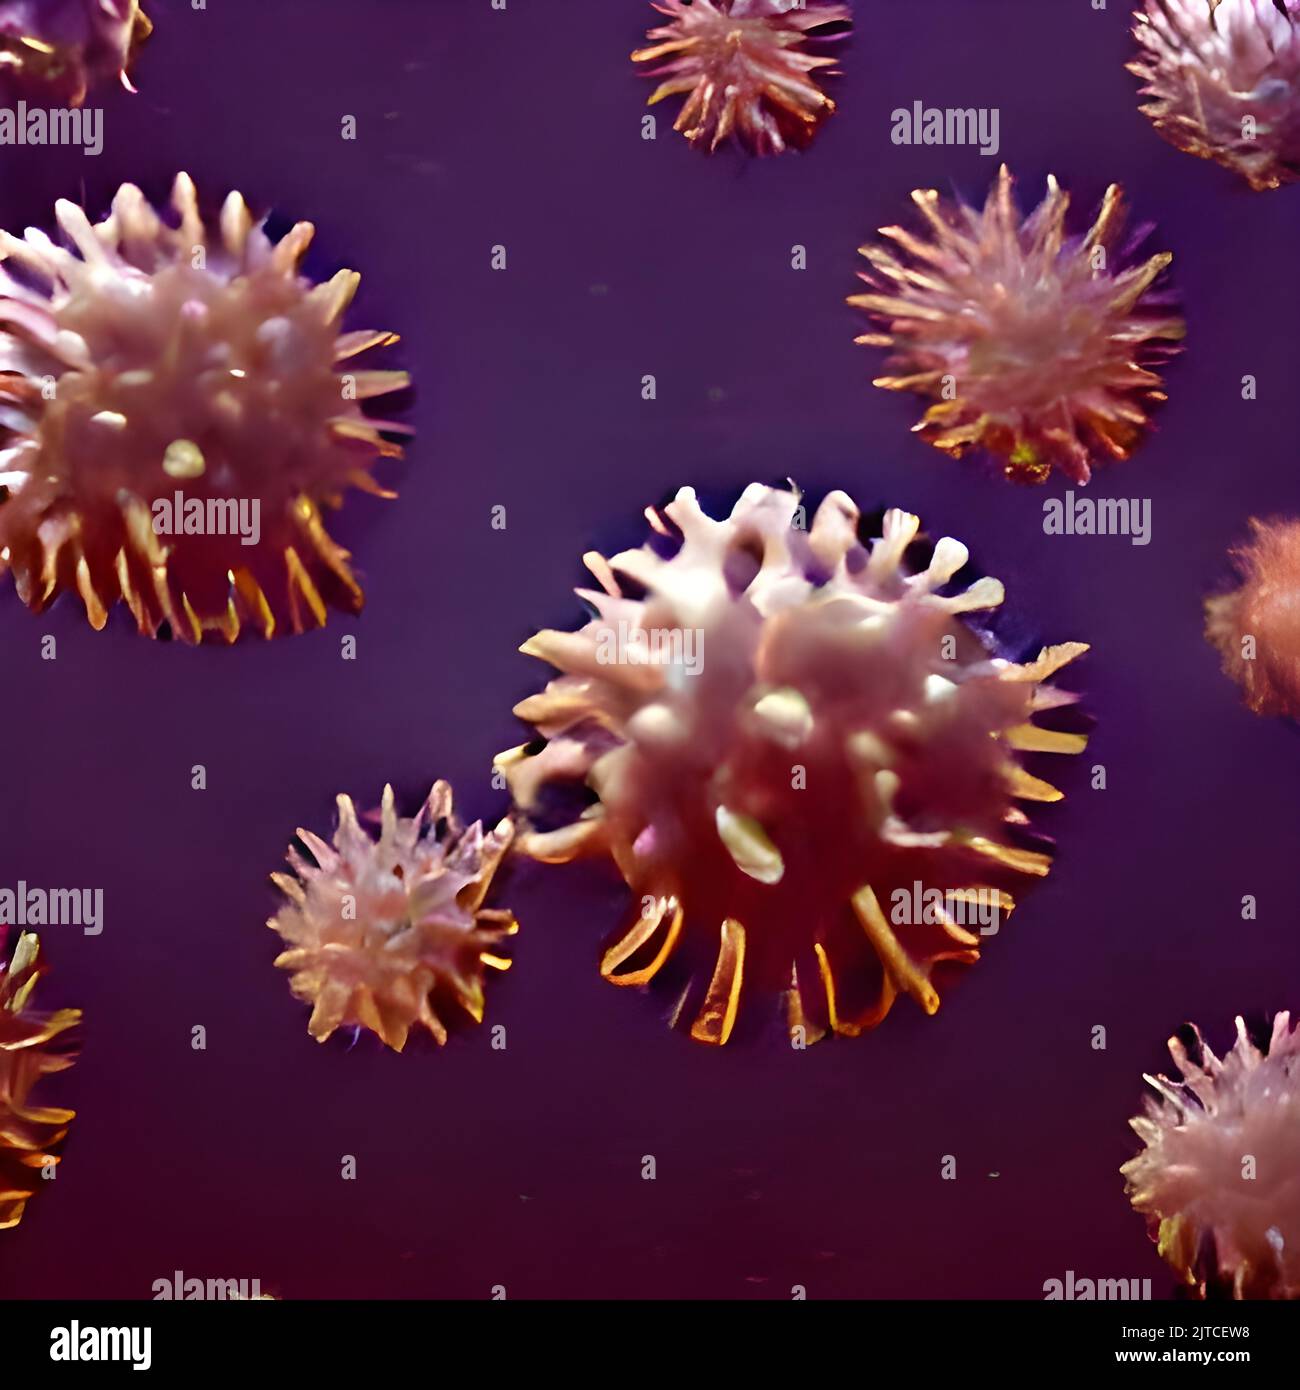 Microscopic view of floating influenza virus cells. Dangerous illness Stock Photo